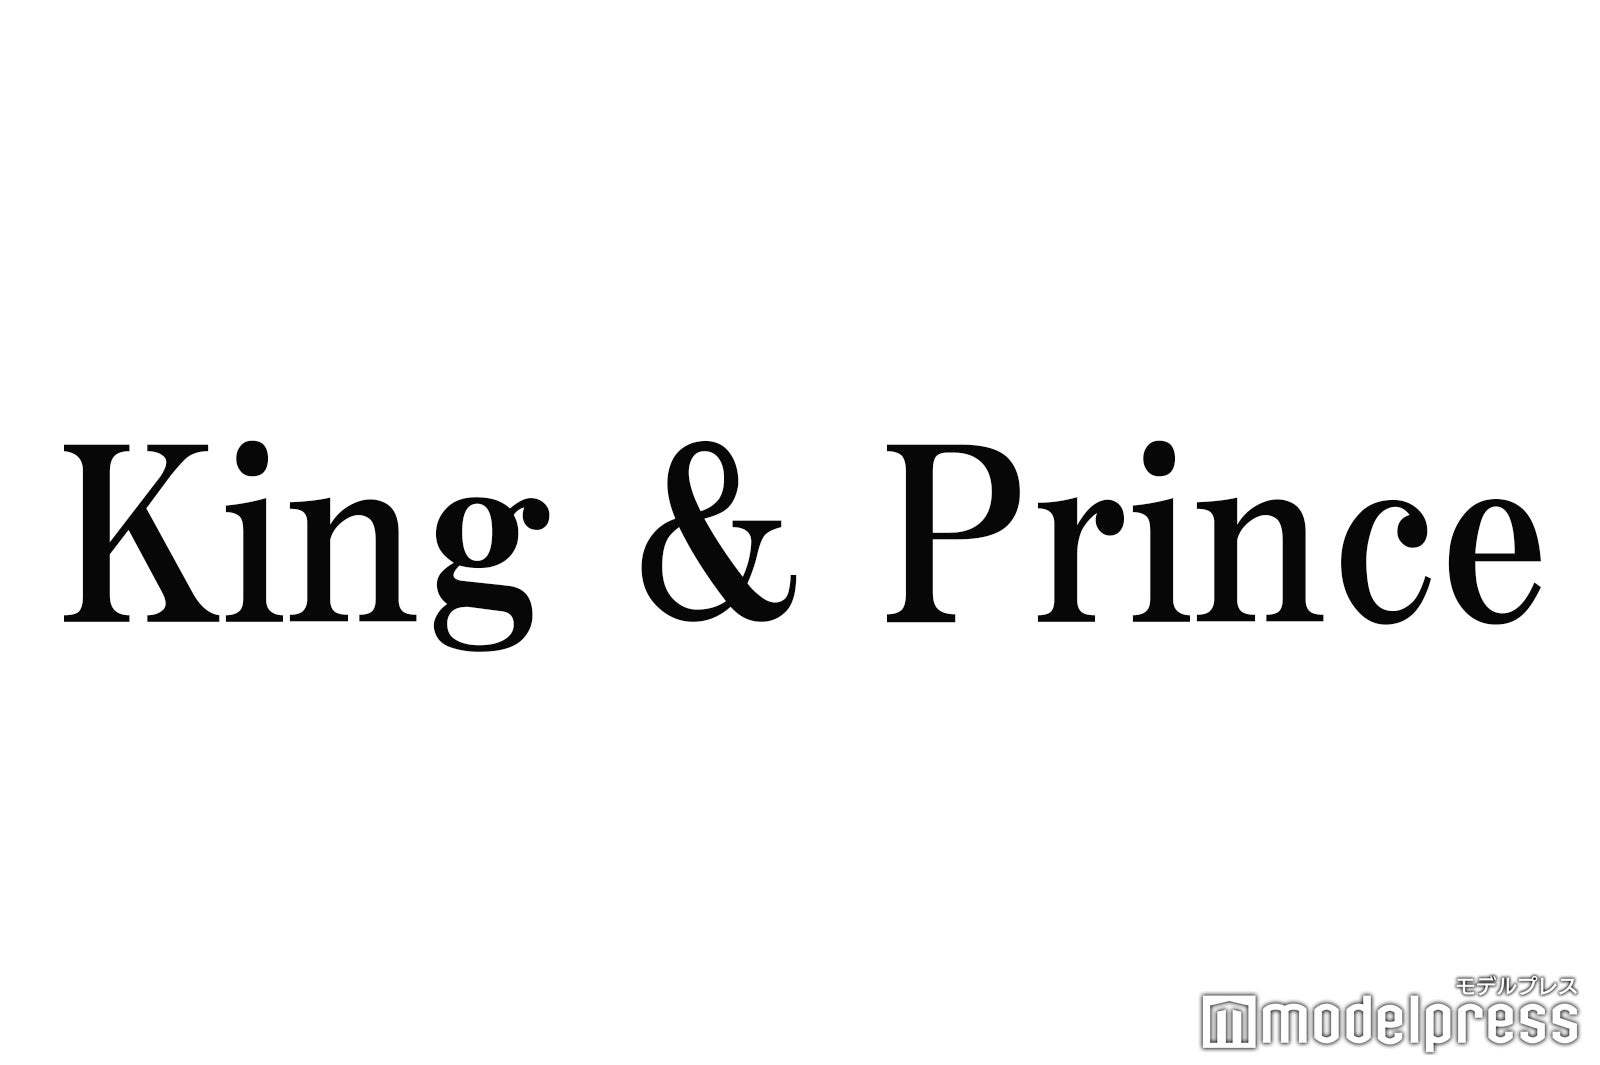 King ＆ Prince、新アー写公開 グループ名のロゴの“変化”が話題「絆の